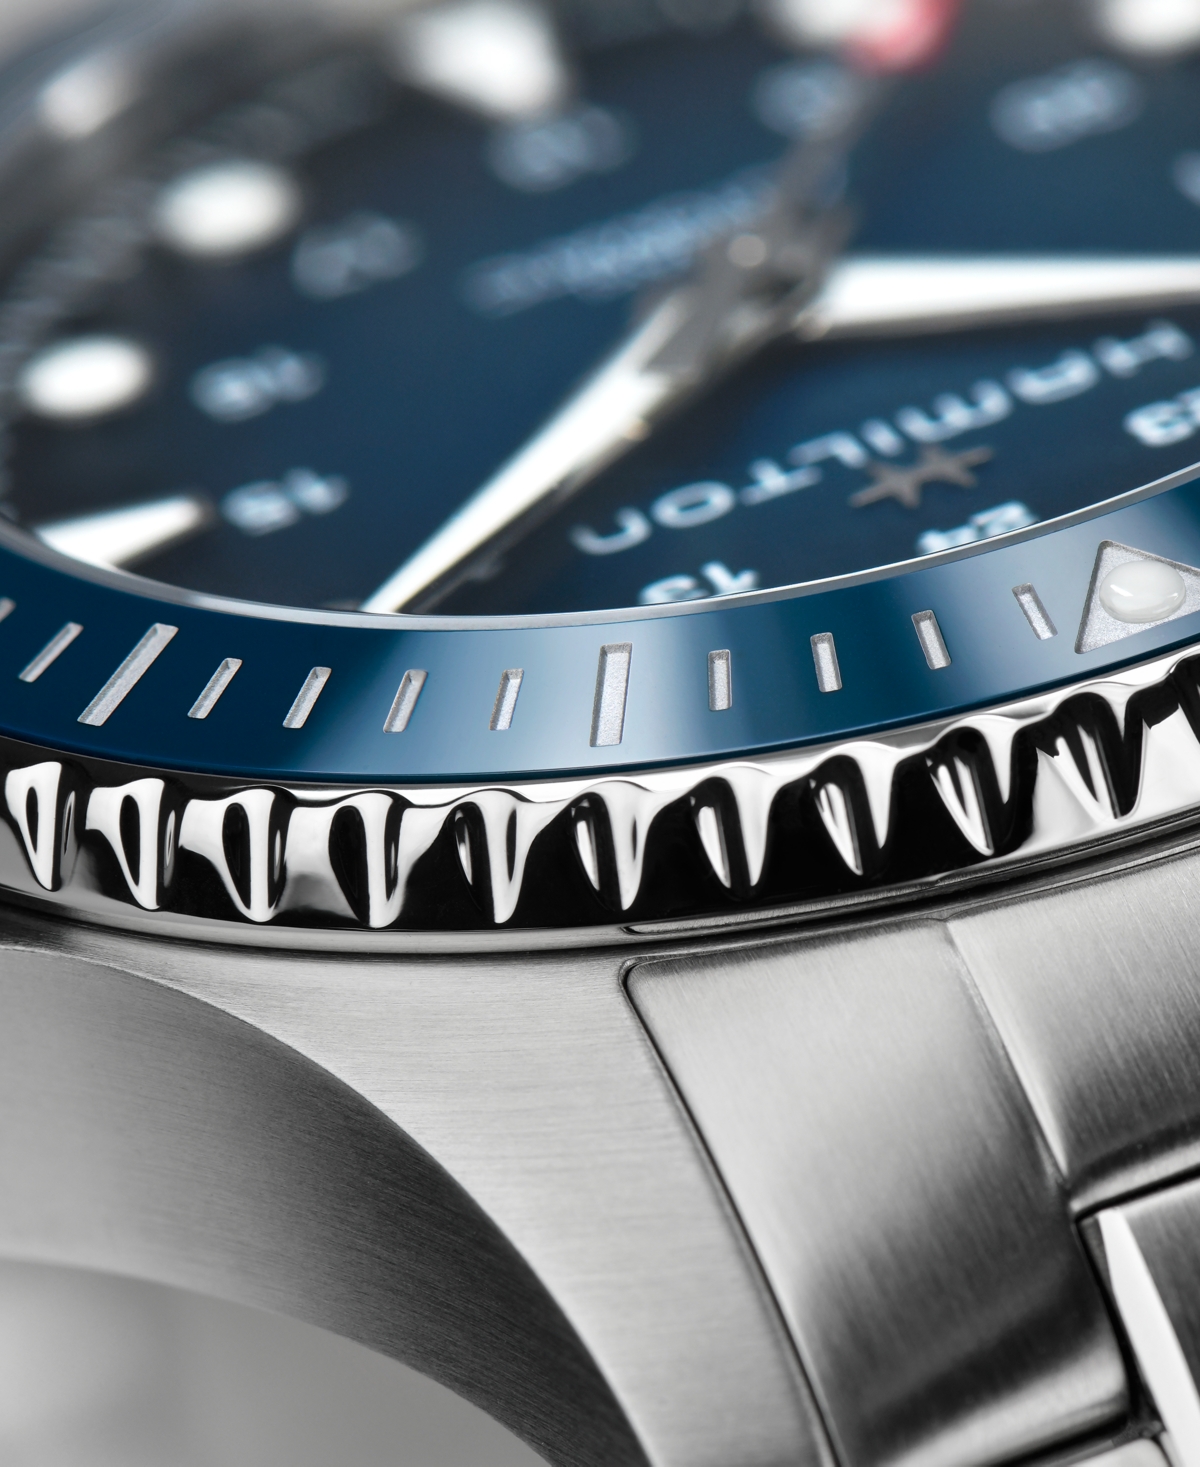 Shop Hamilton Men's Swiss Automatic Khaki Navy Scuba Stainless Steel Bracelet Watch 43mm